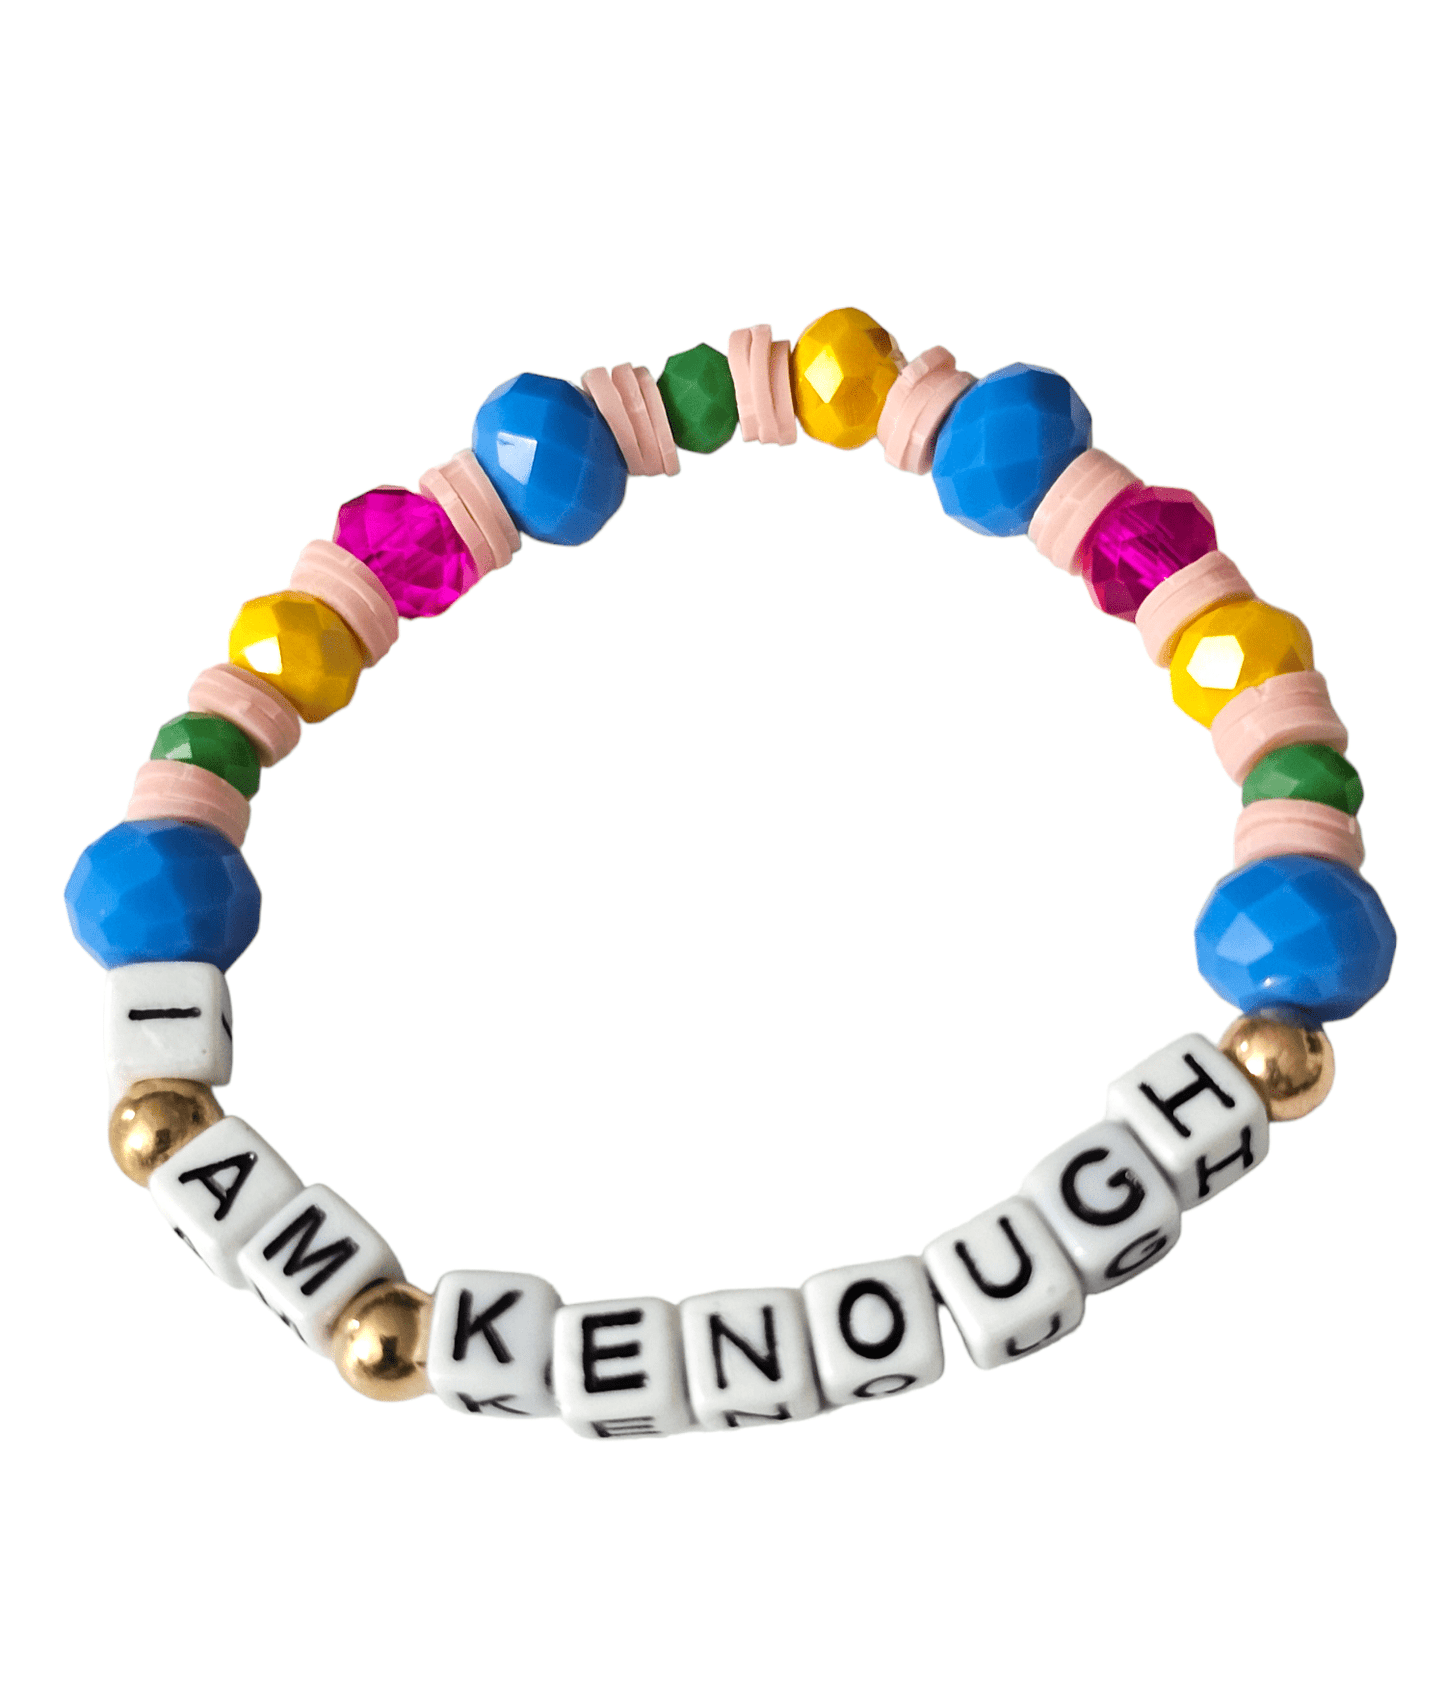 I Am Kenough Bracelet